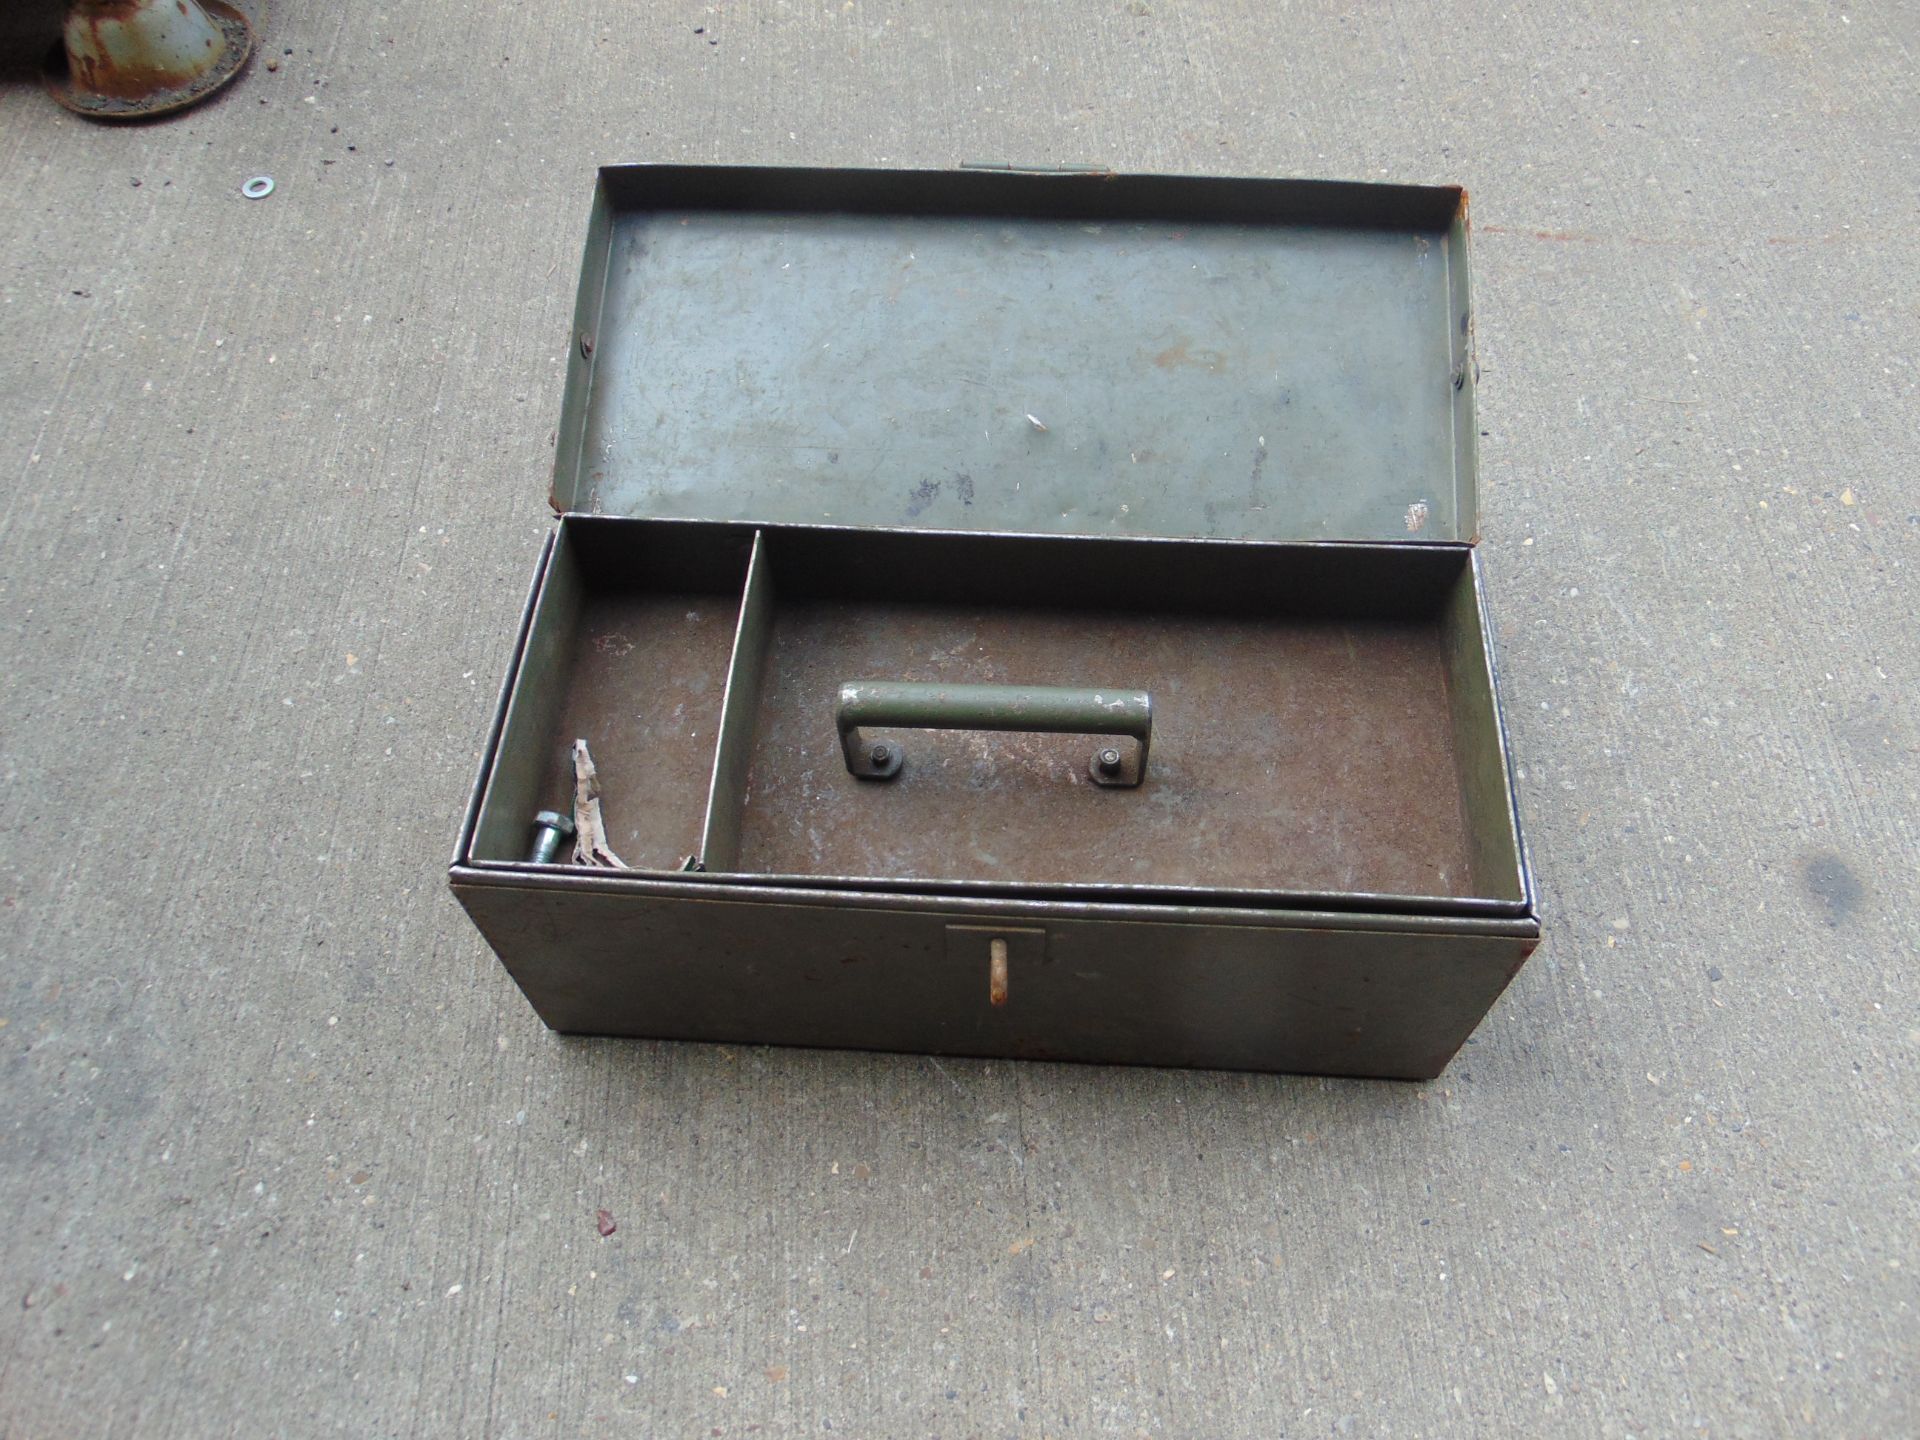 Mechanics Toolbox with Tray